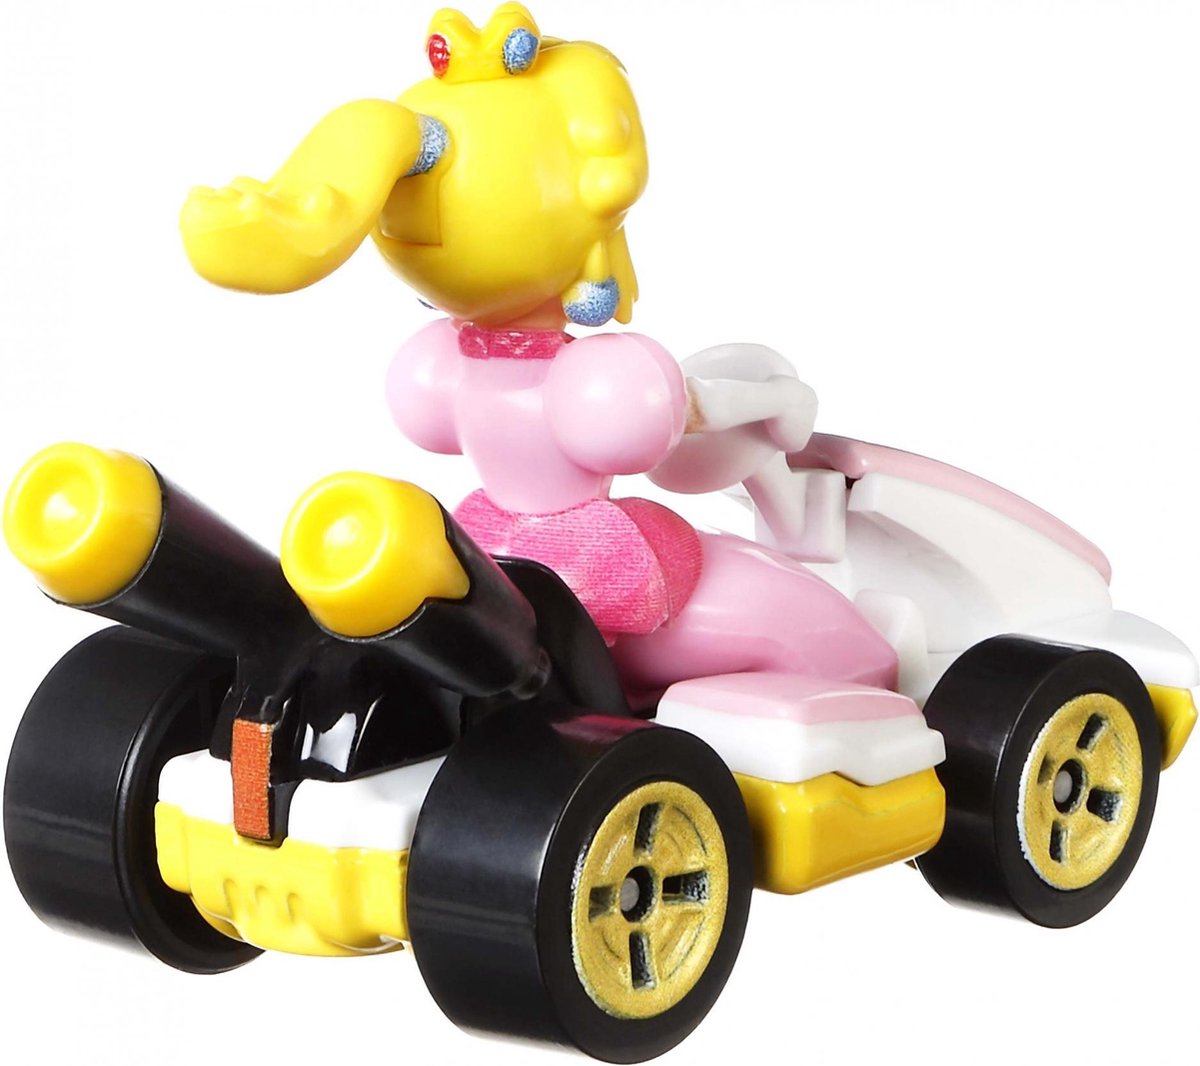 Mattel Games Hot Wheels Mario Kart Assorted Vehicles